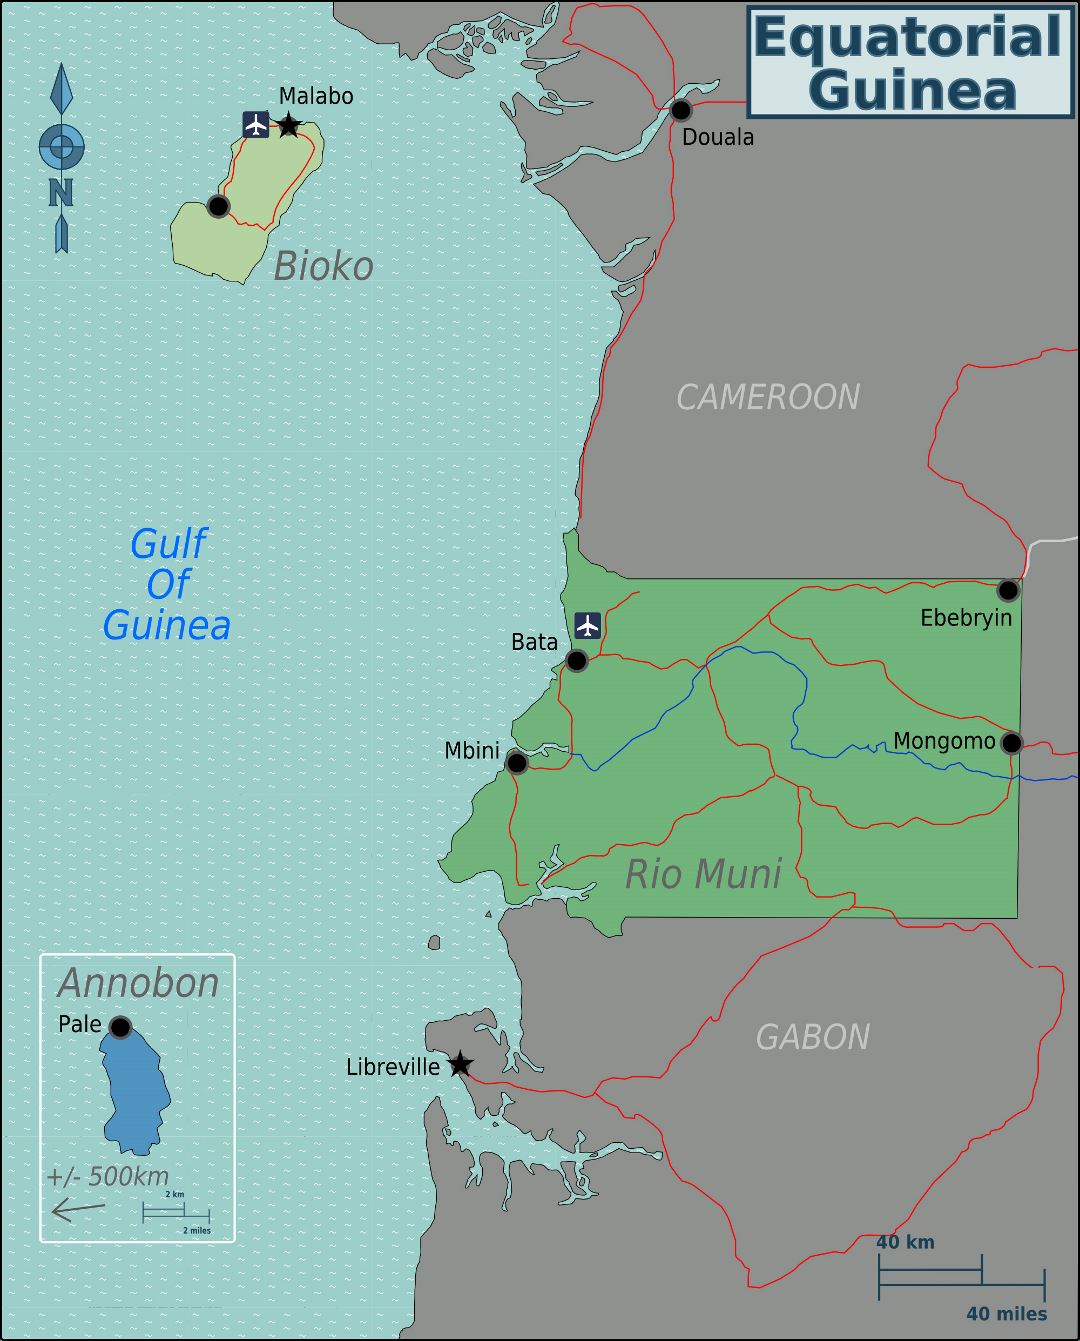 Large regions map of Equatorial Guinea